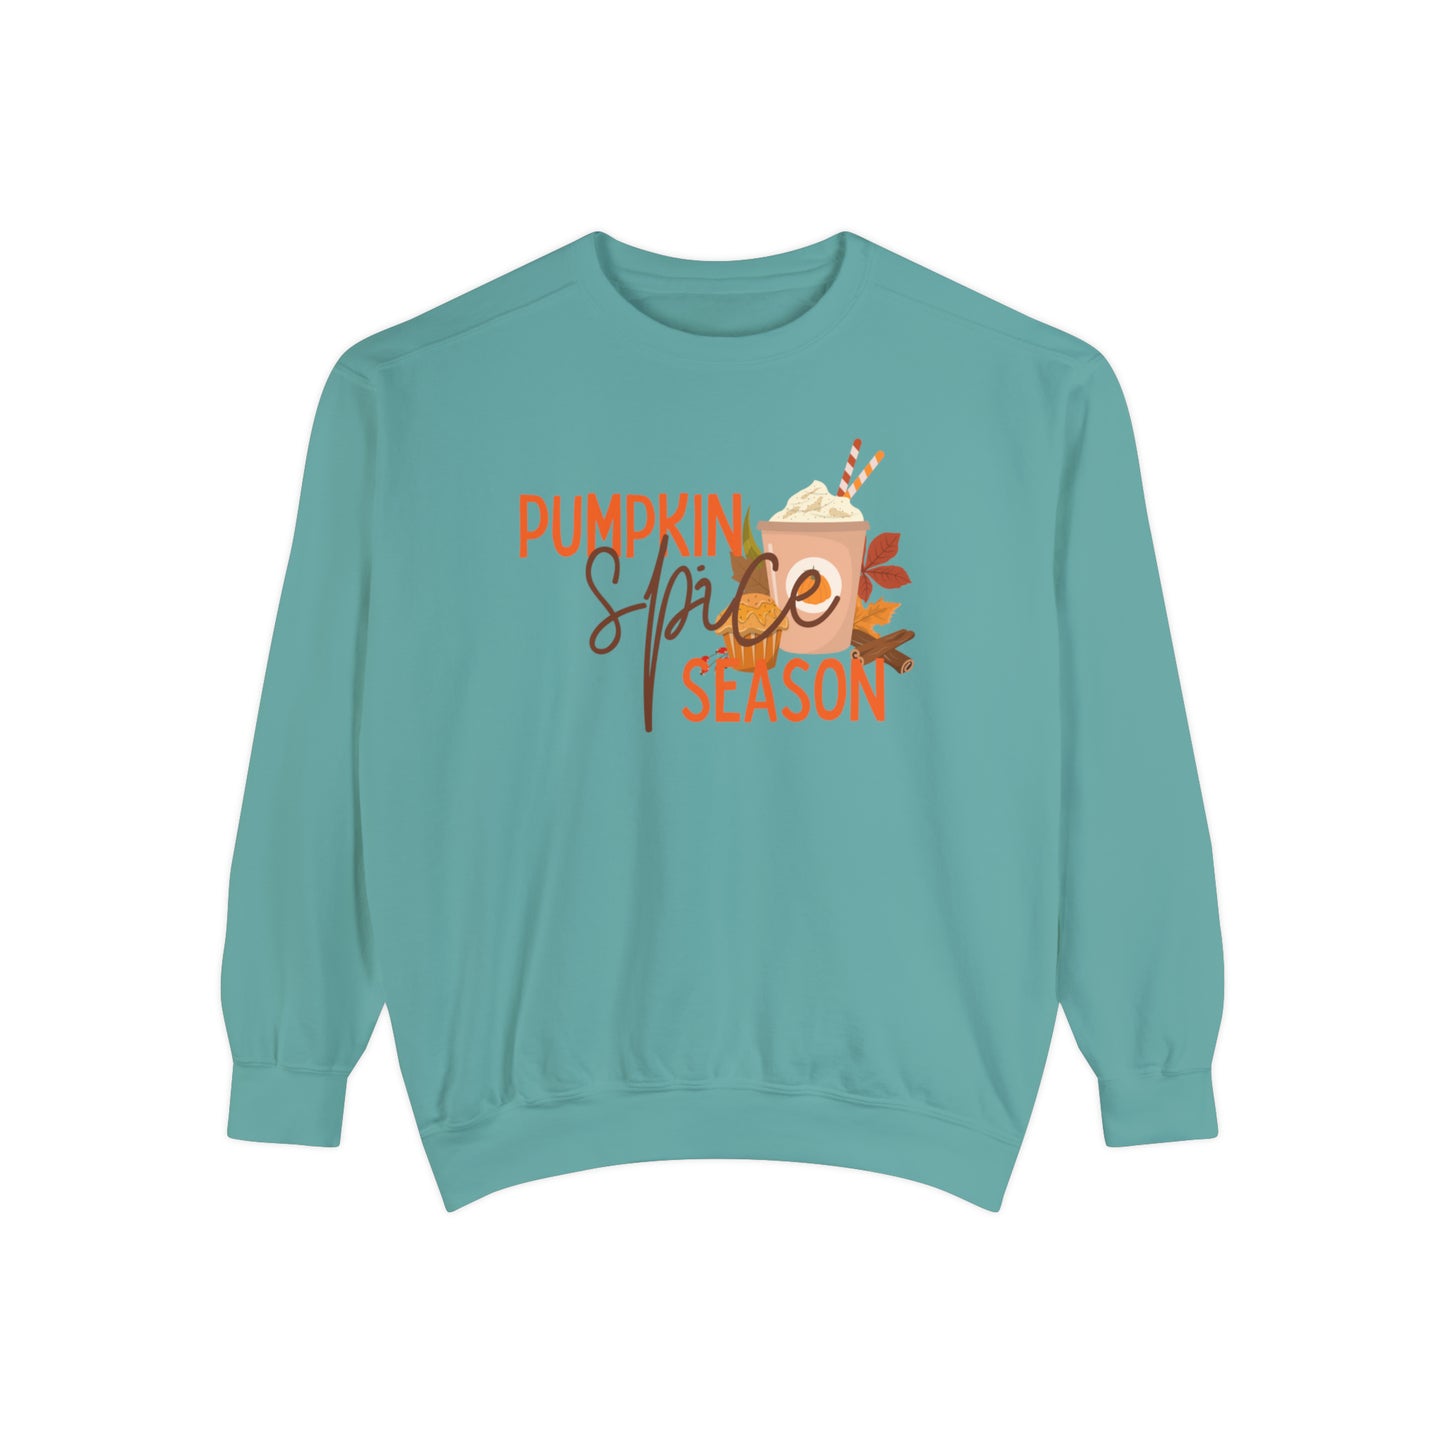 Pumpkin Spice Season sweatshirt